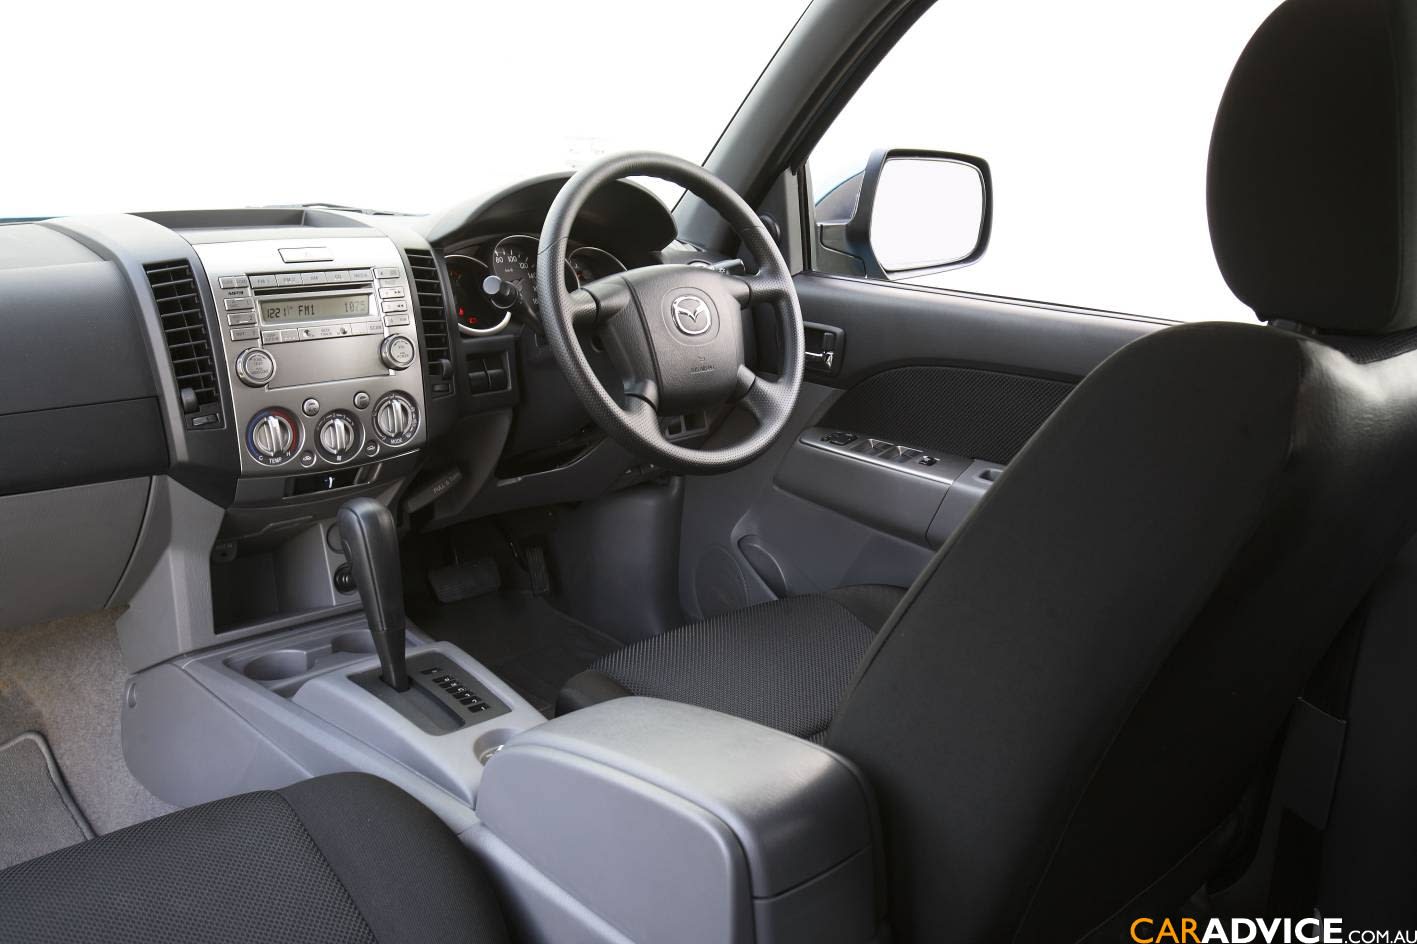 2008 Mazda BT-50 range | CarAdvice